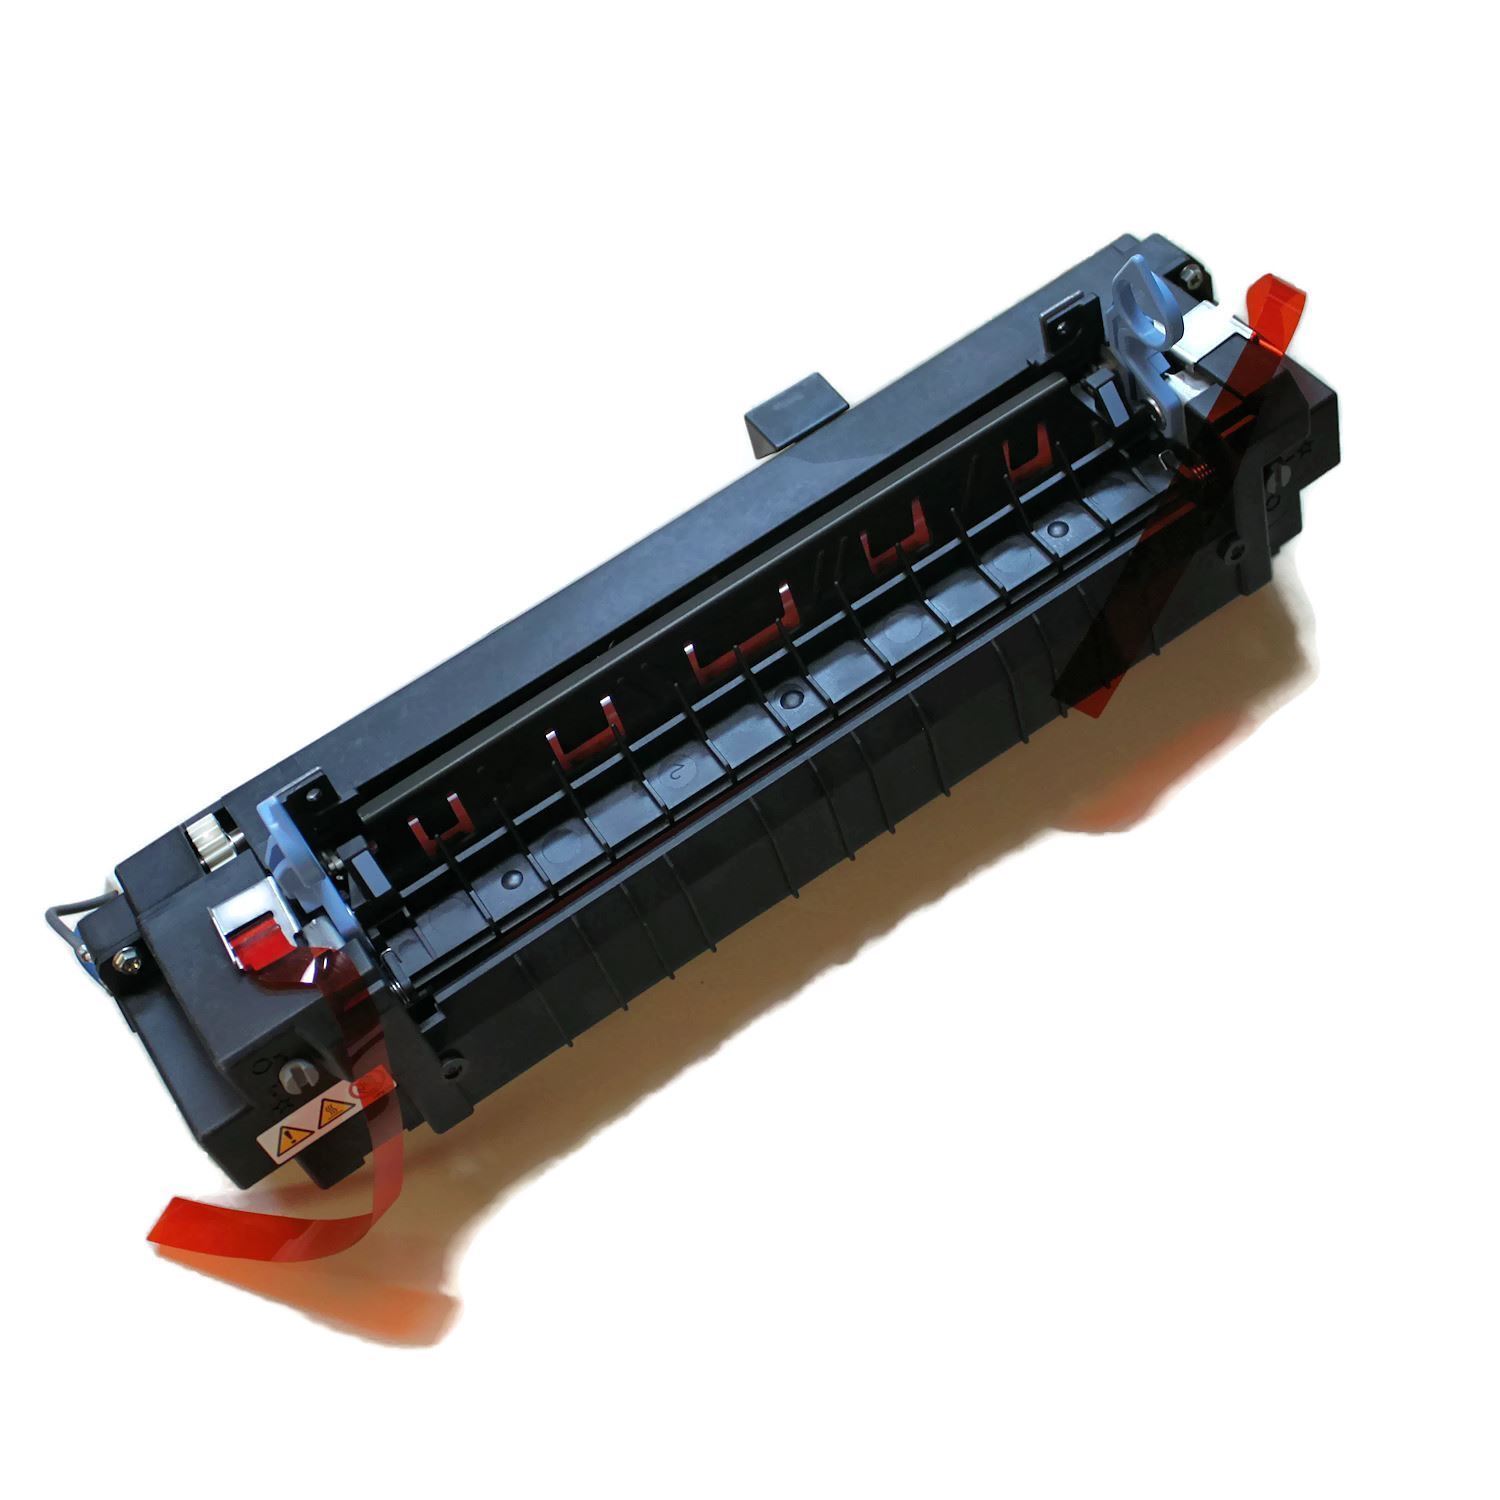 NEW Genuine RICOH AFICIO SP C240DN C242DN C242SF Color Printer Fuser Unit Lanier